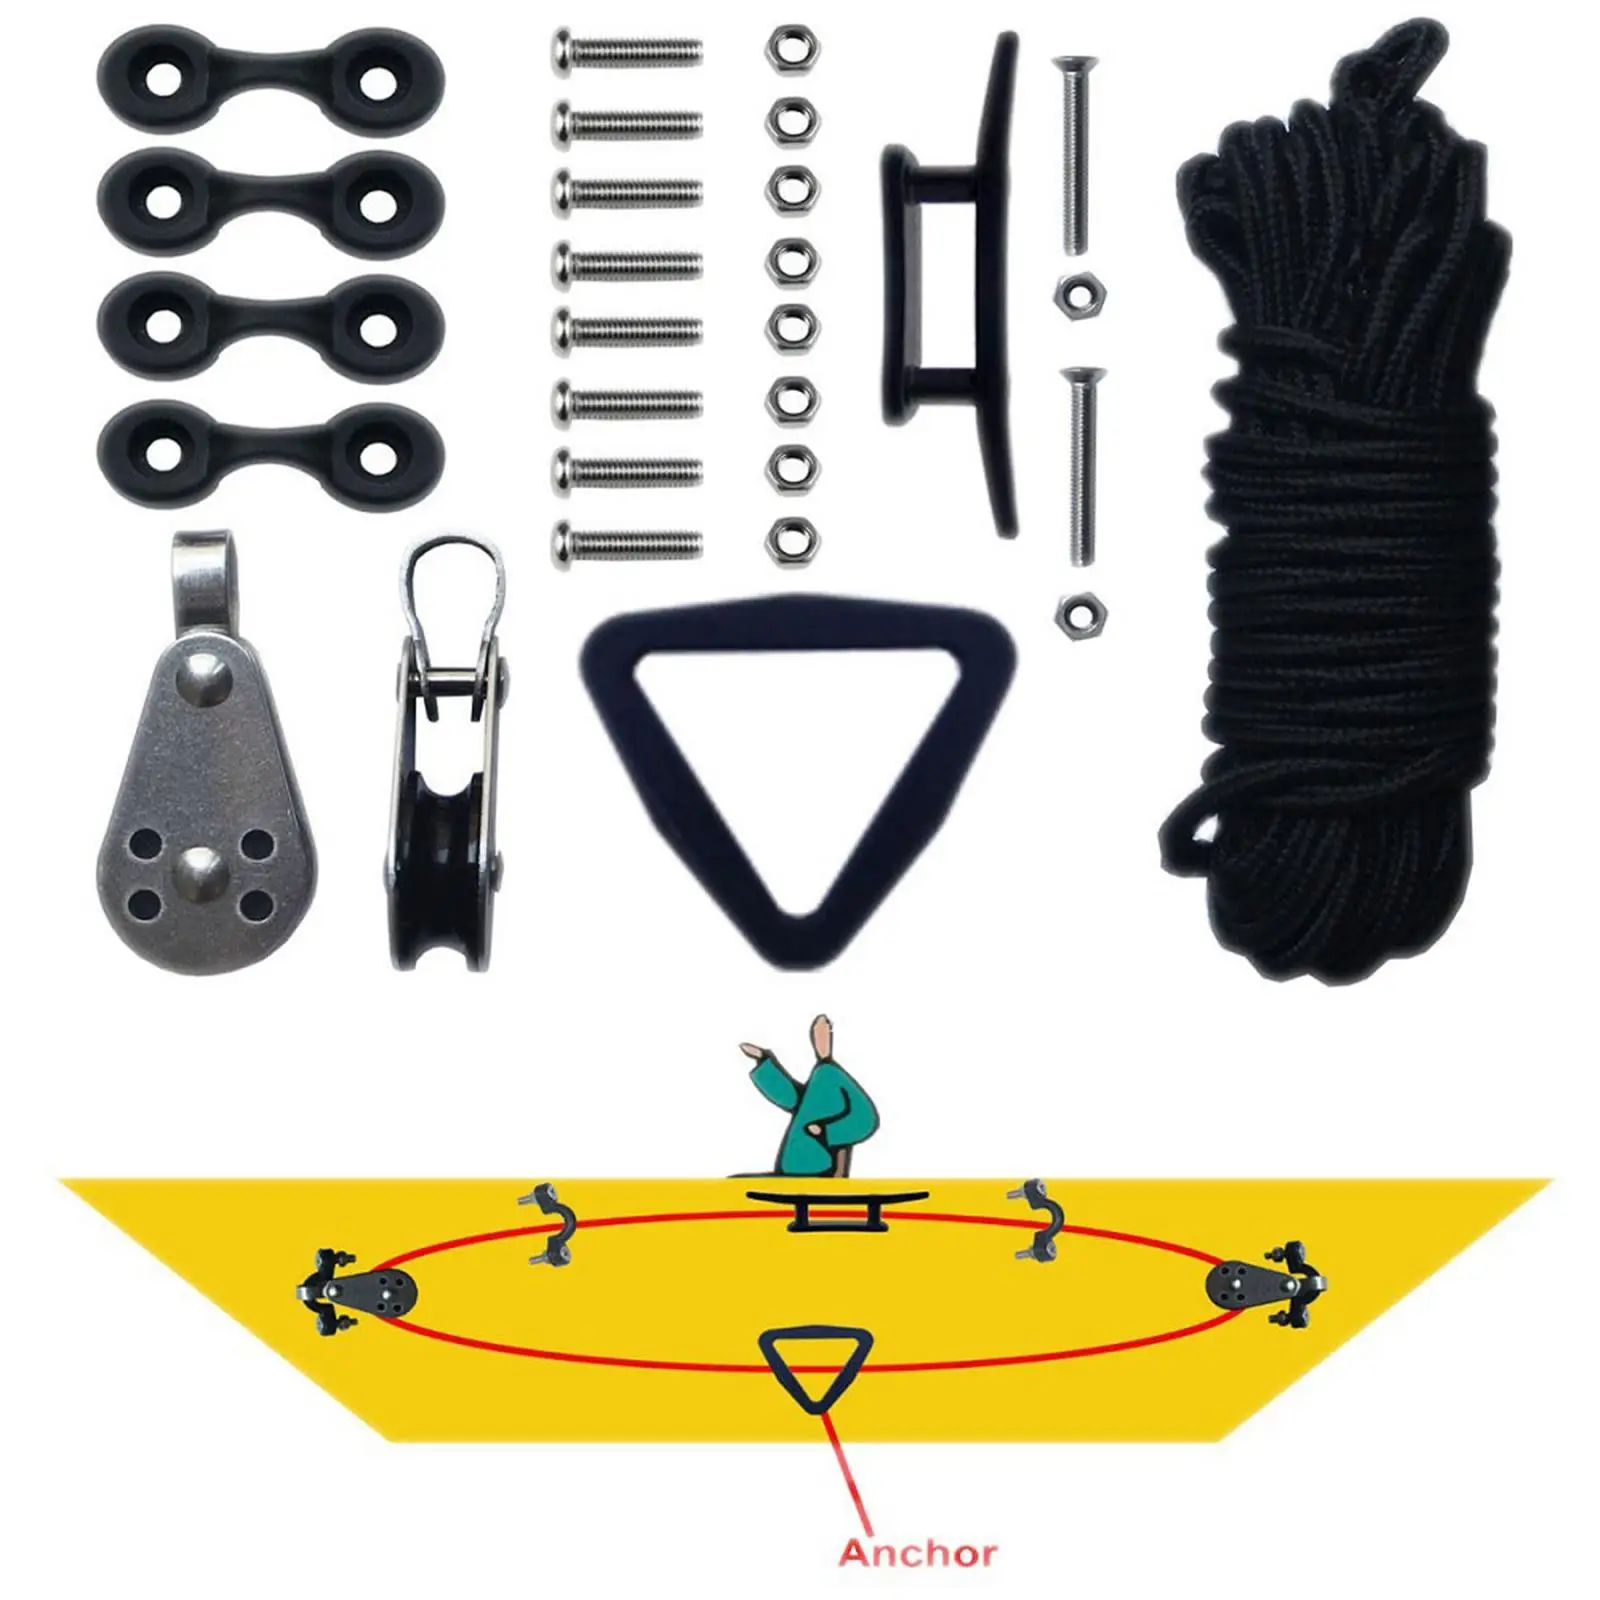 Kayak Anchor Trolley Kit System W/ SS316 Hardware Rope Ring Pulleys Pad Eye Screws Cleats Kayak Accessories